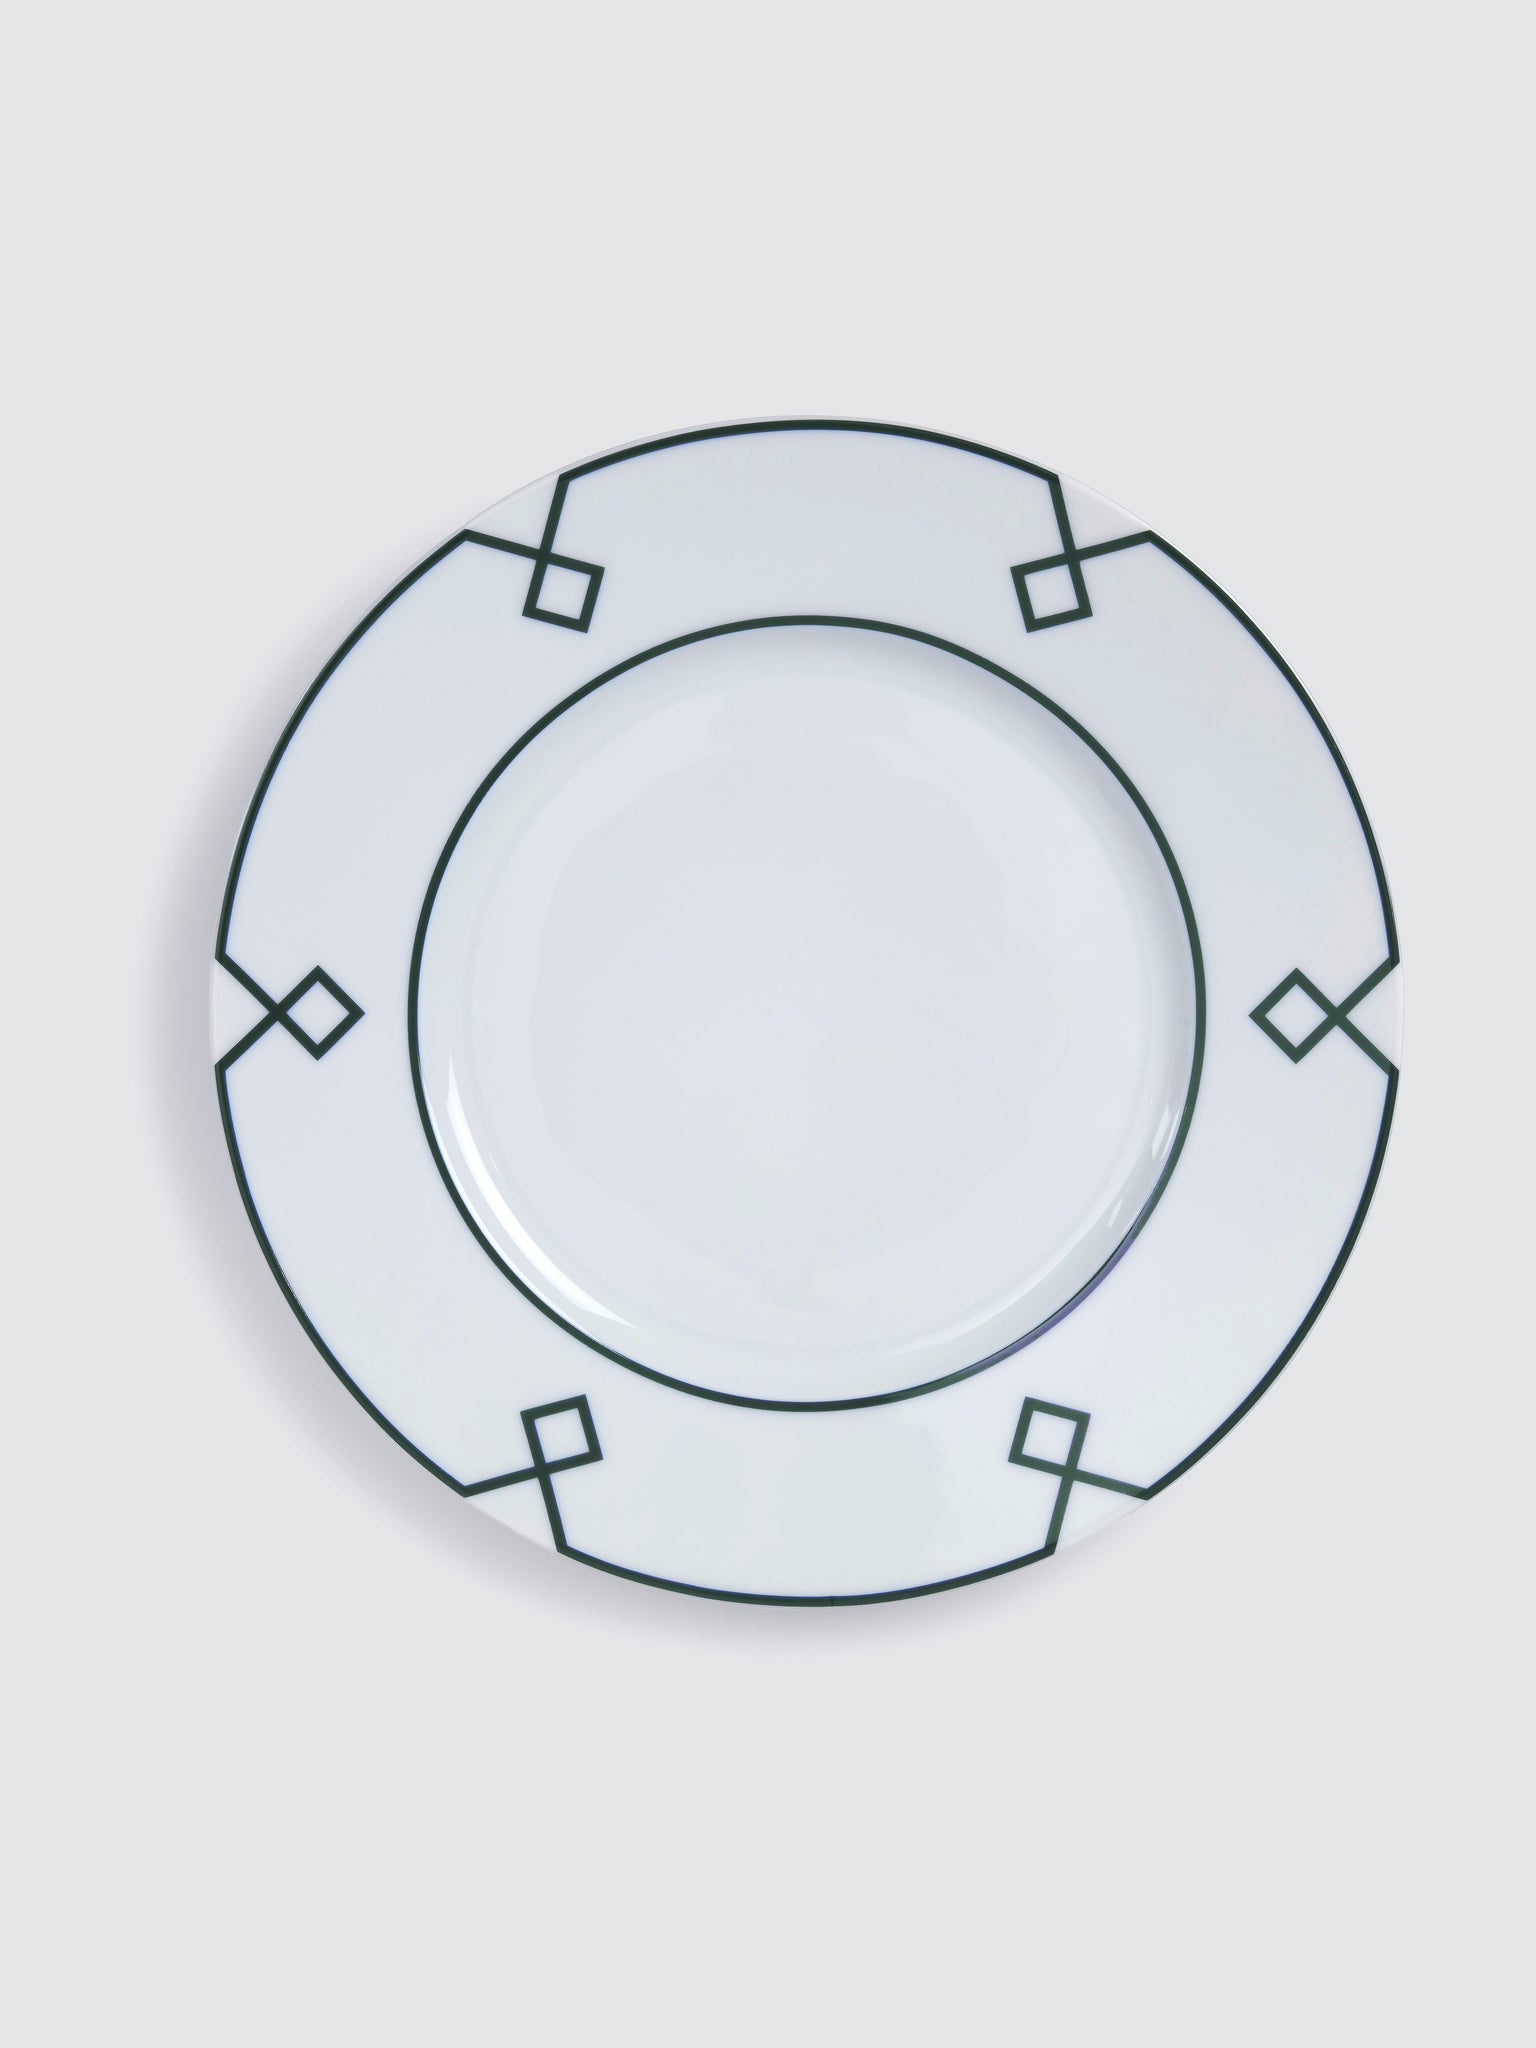 Naples Dinner Plate with Green Geometric Border